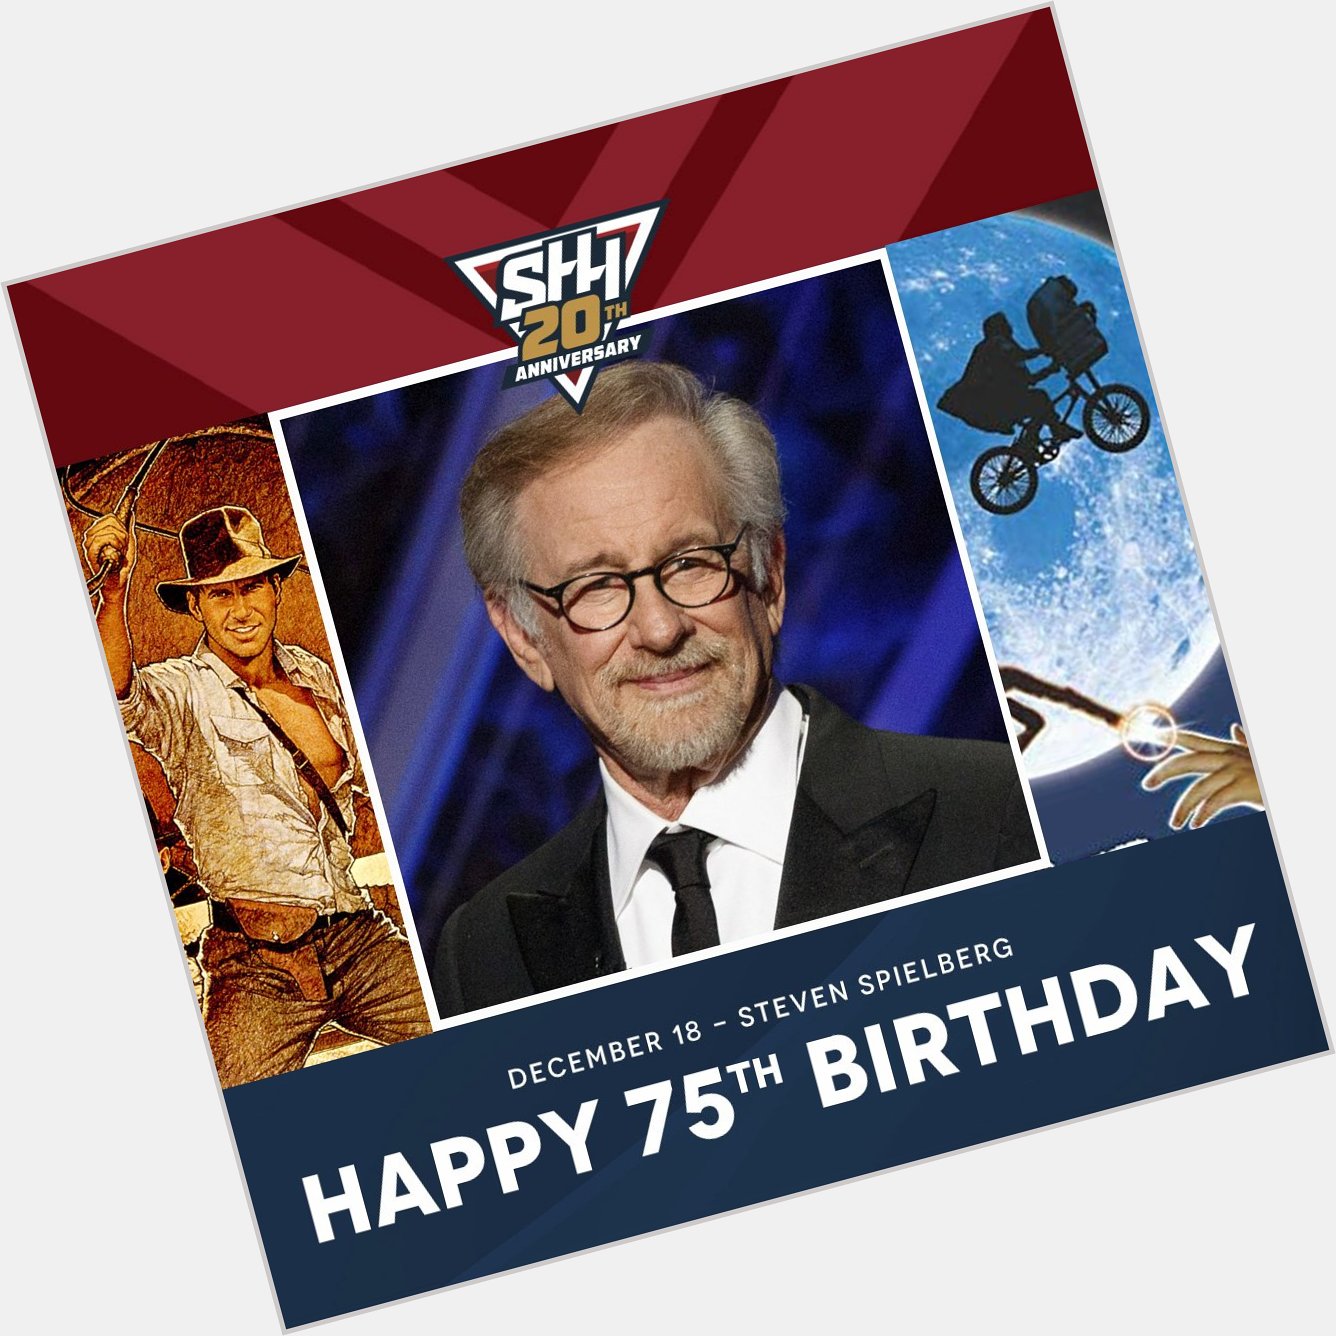 Happy Birthday to director Steven Spielberg! 